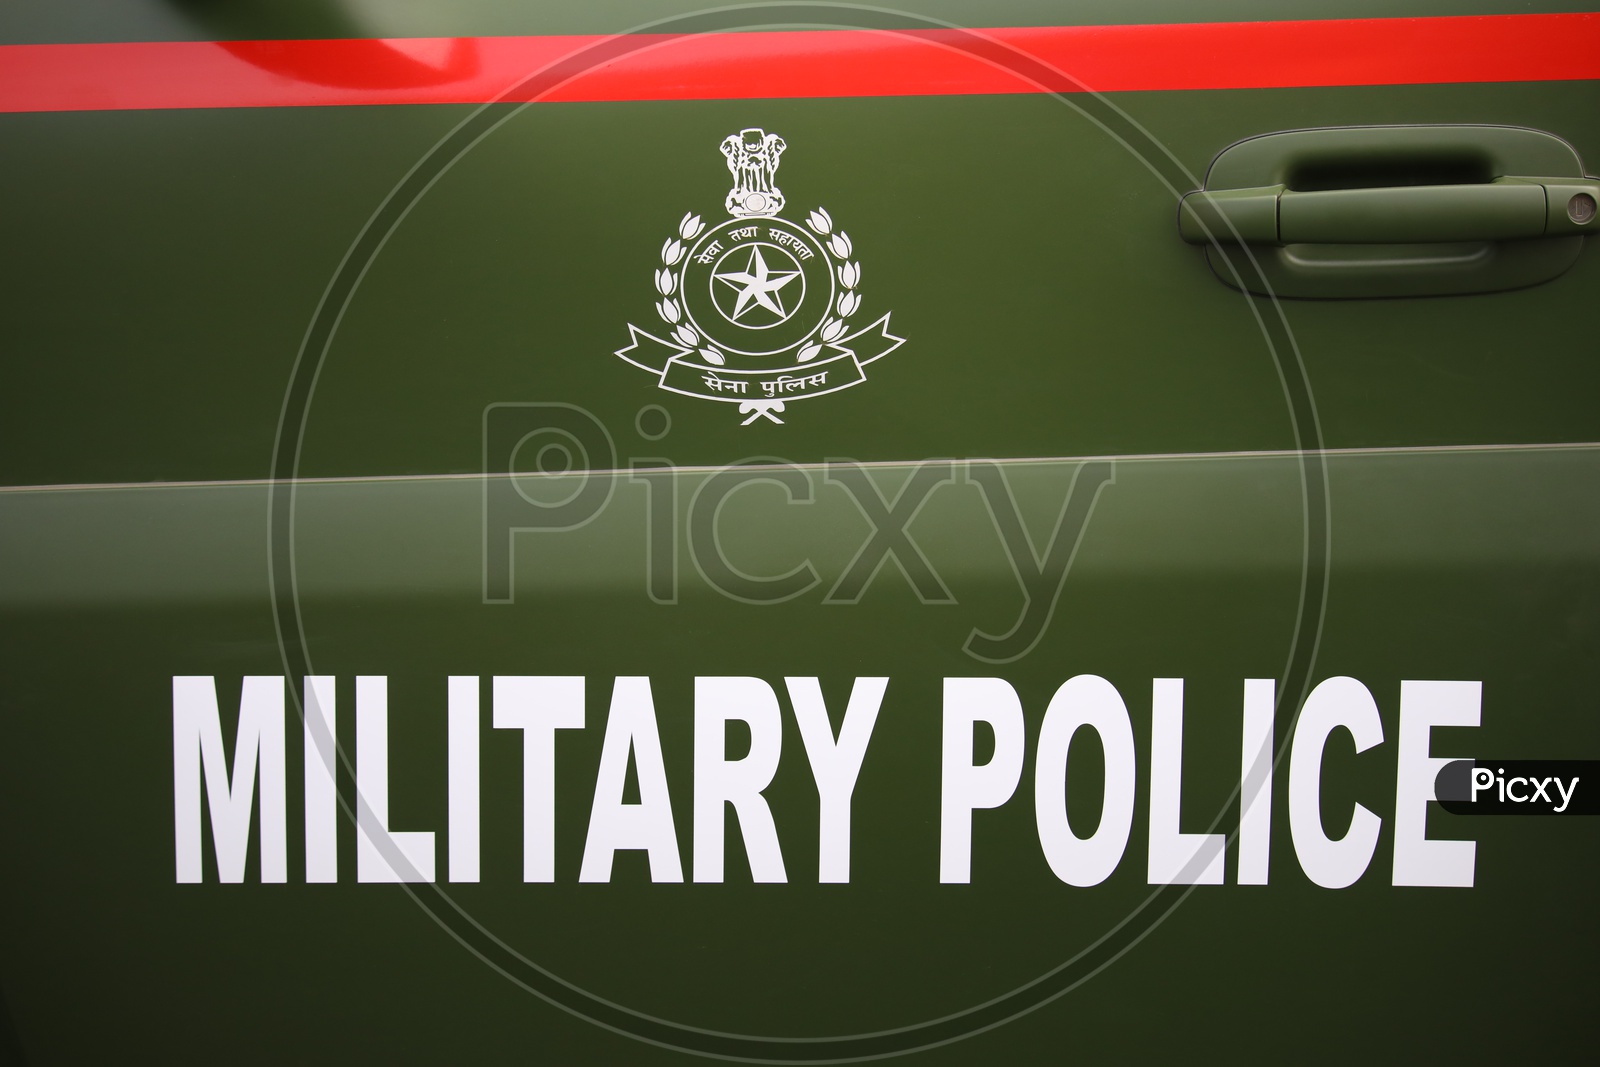 Military Police Vehicle